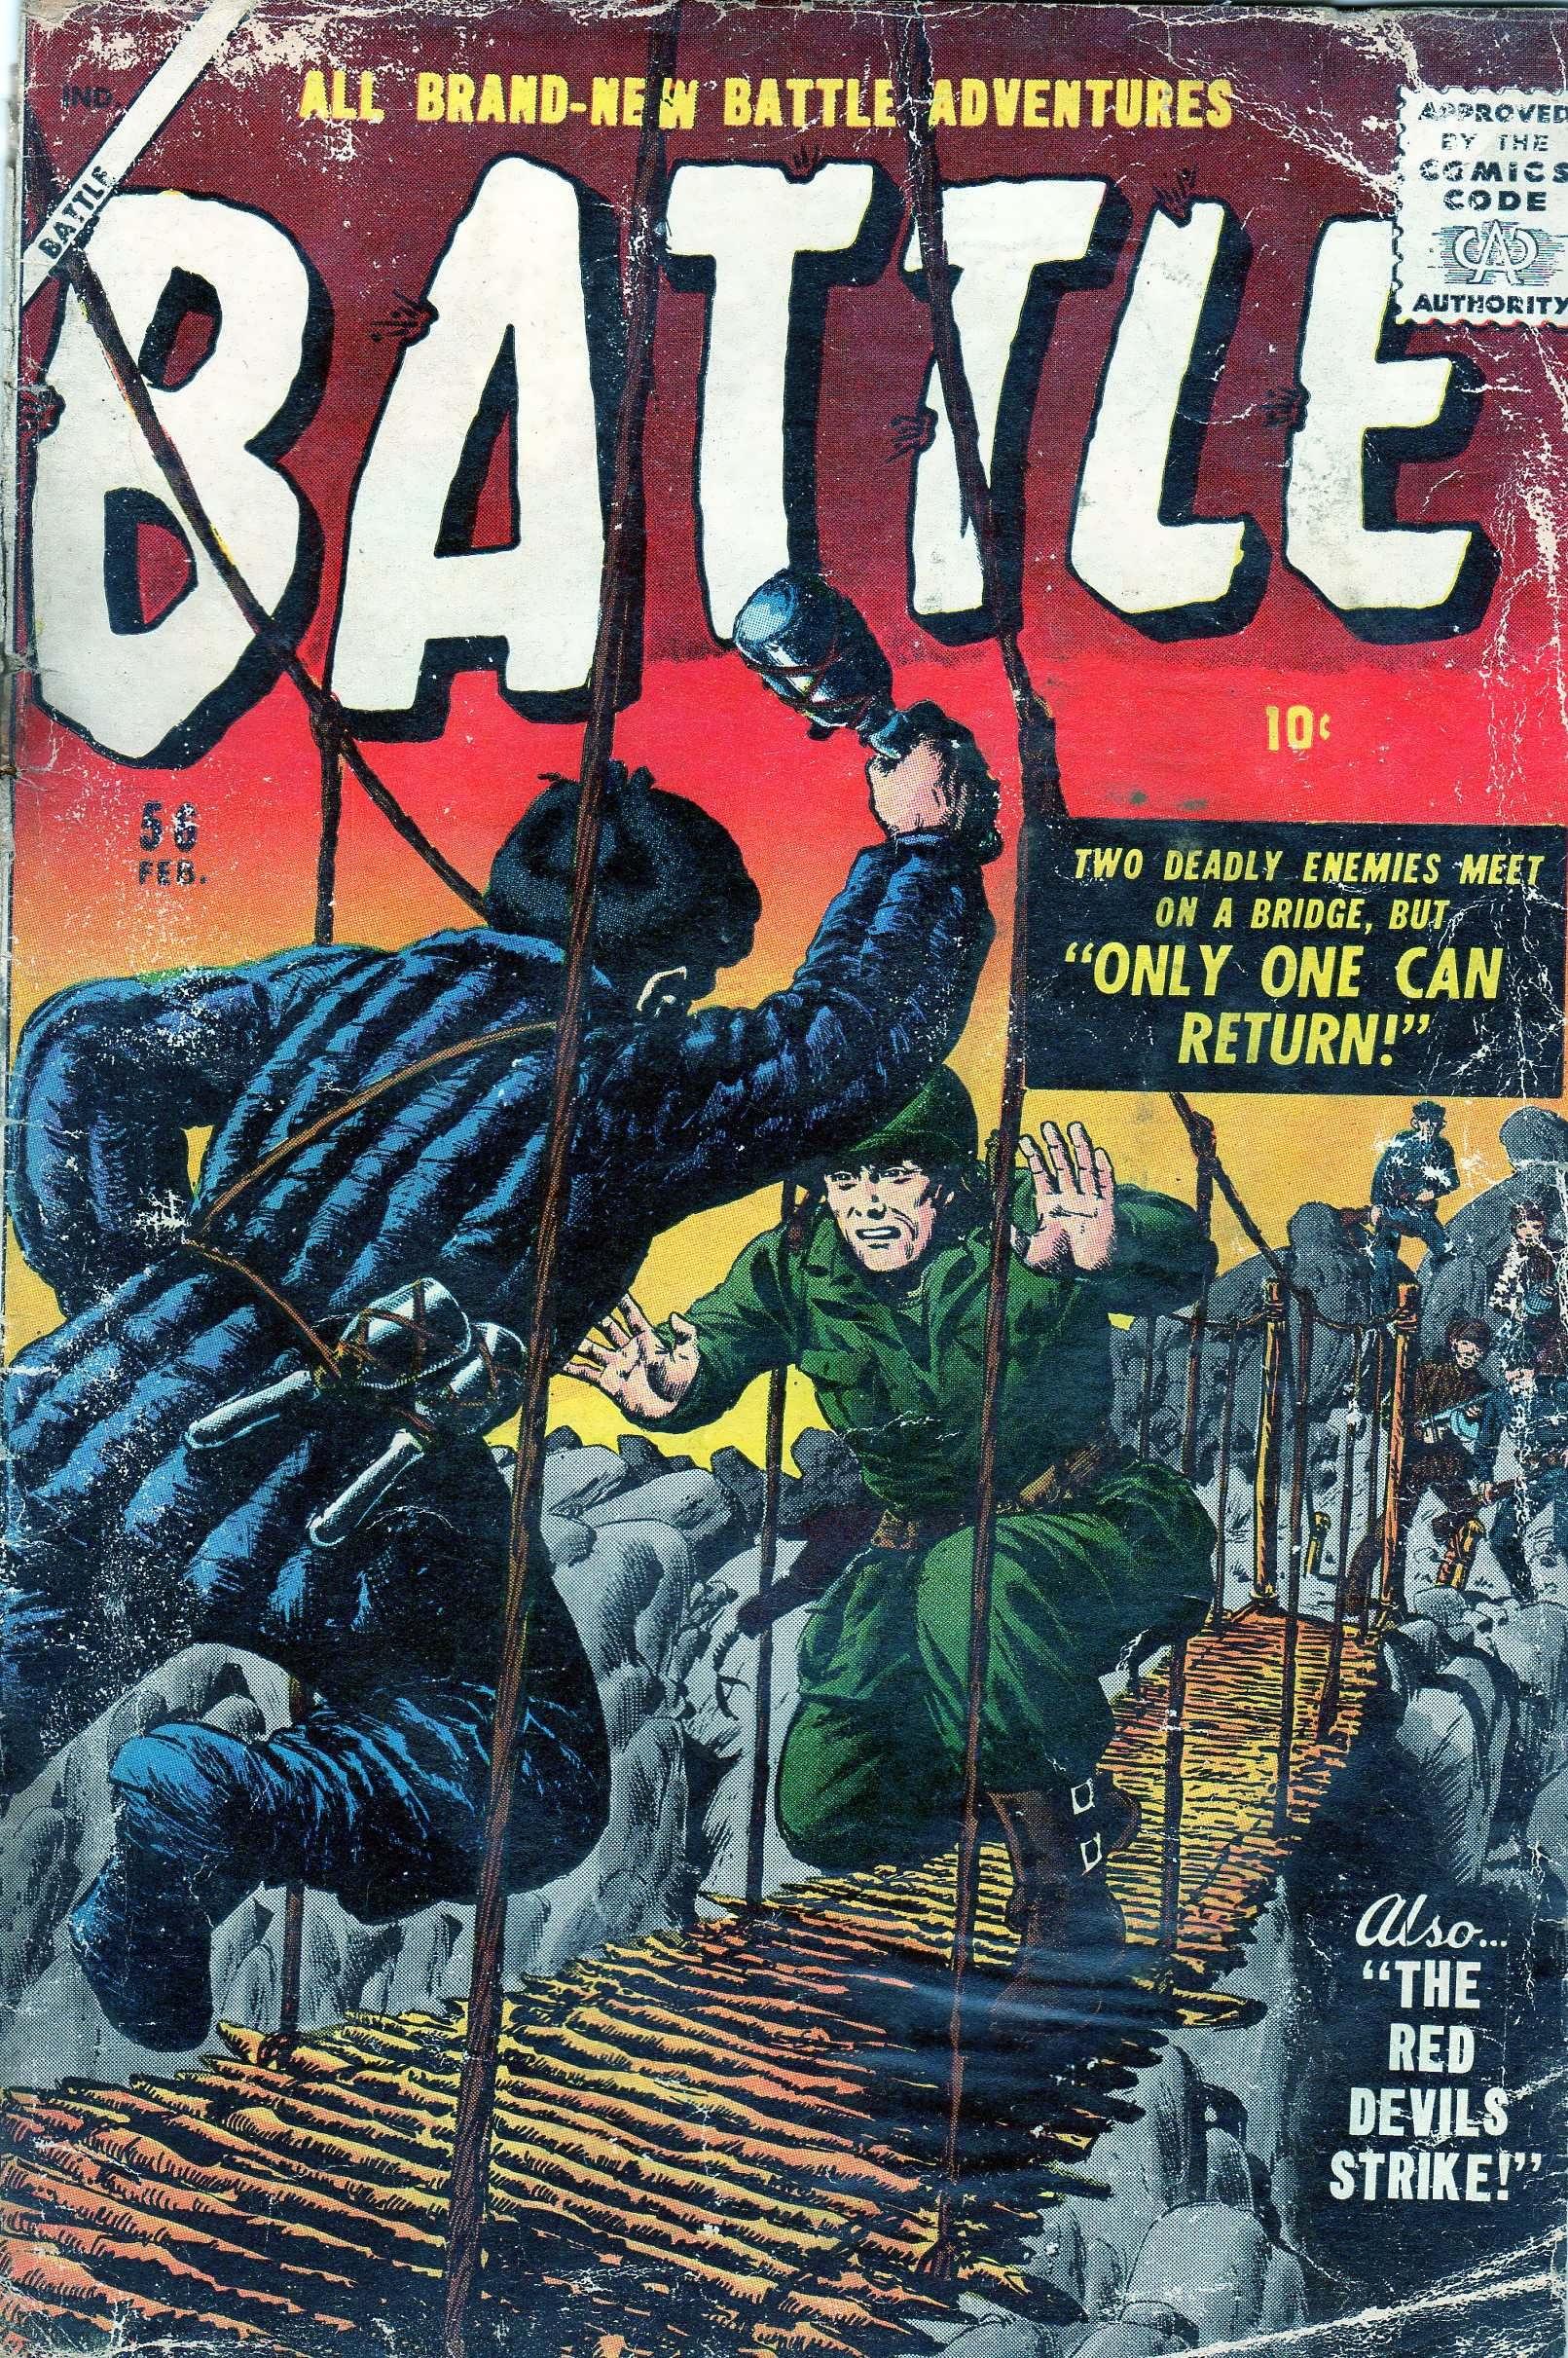 Battle Vol. 1 #56